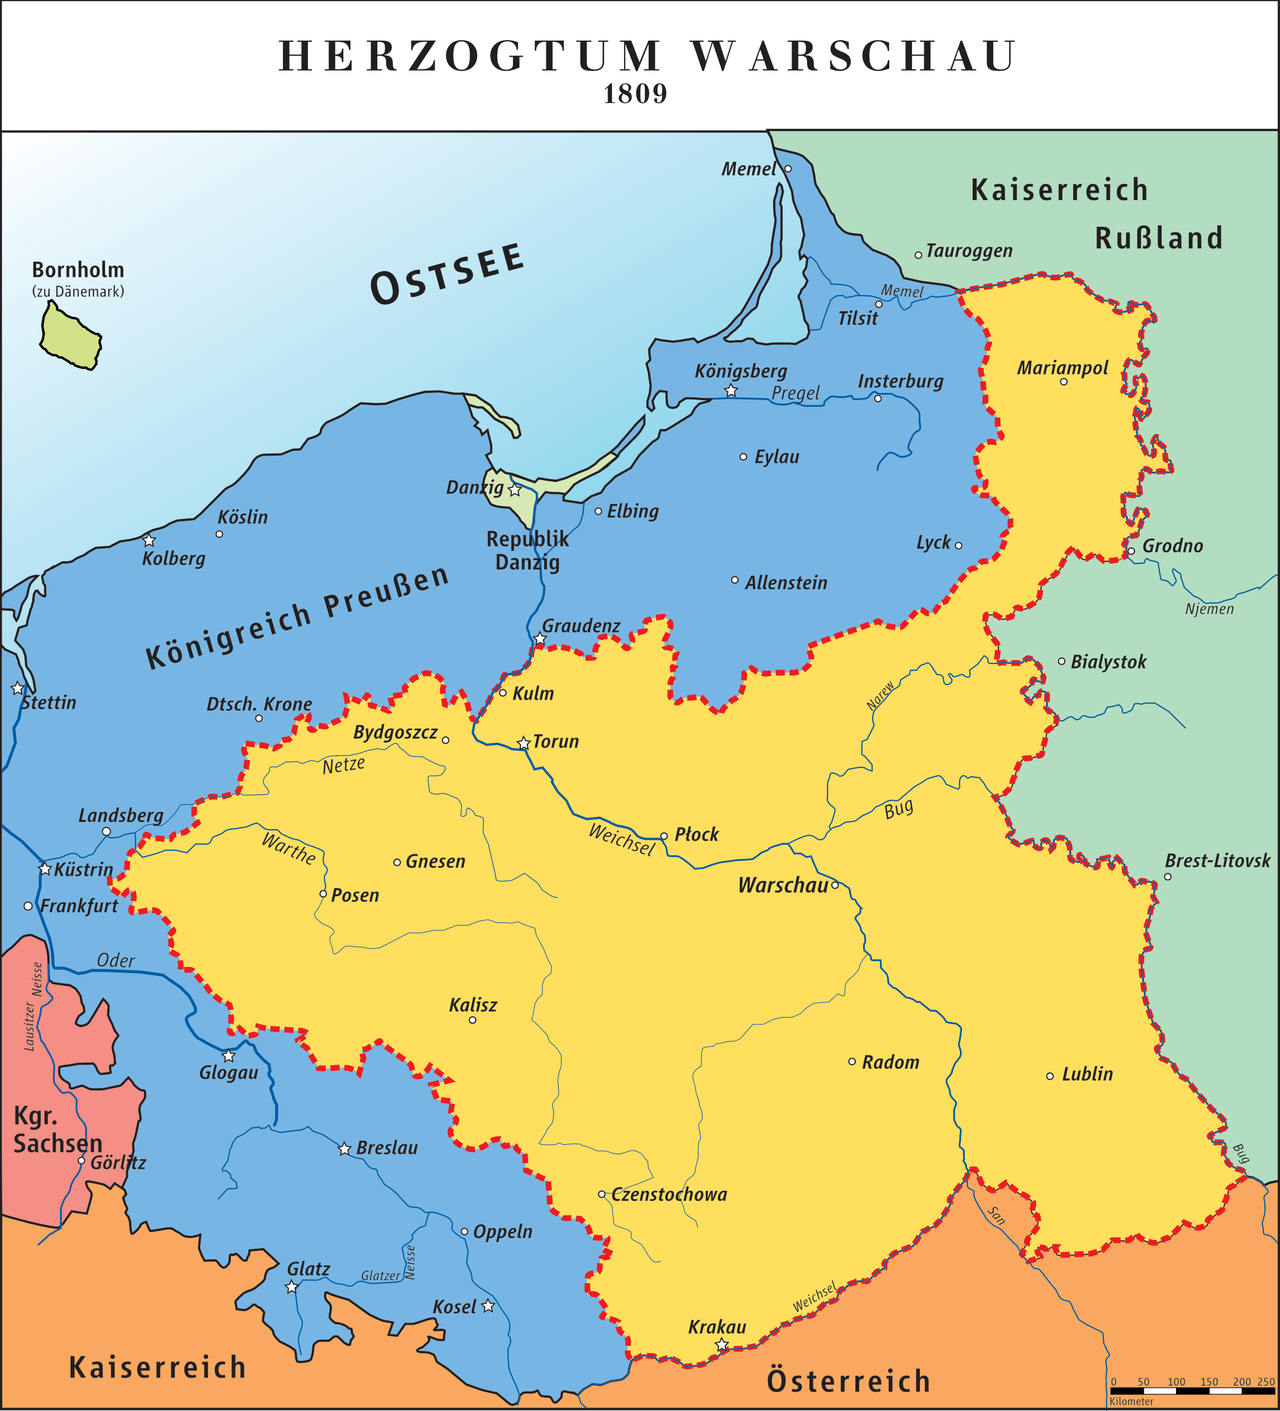 Данцигский коридор карта